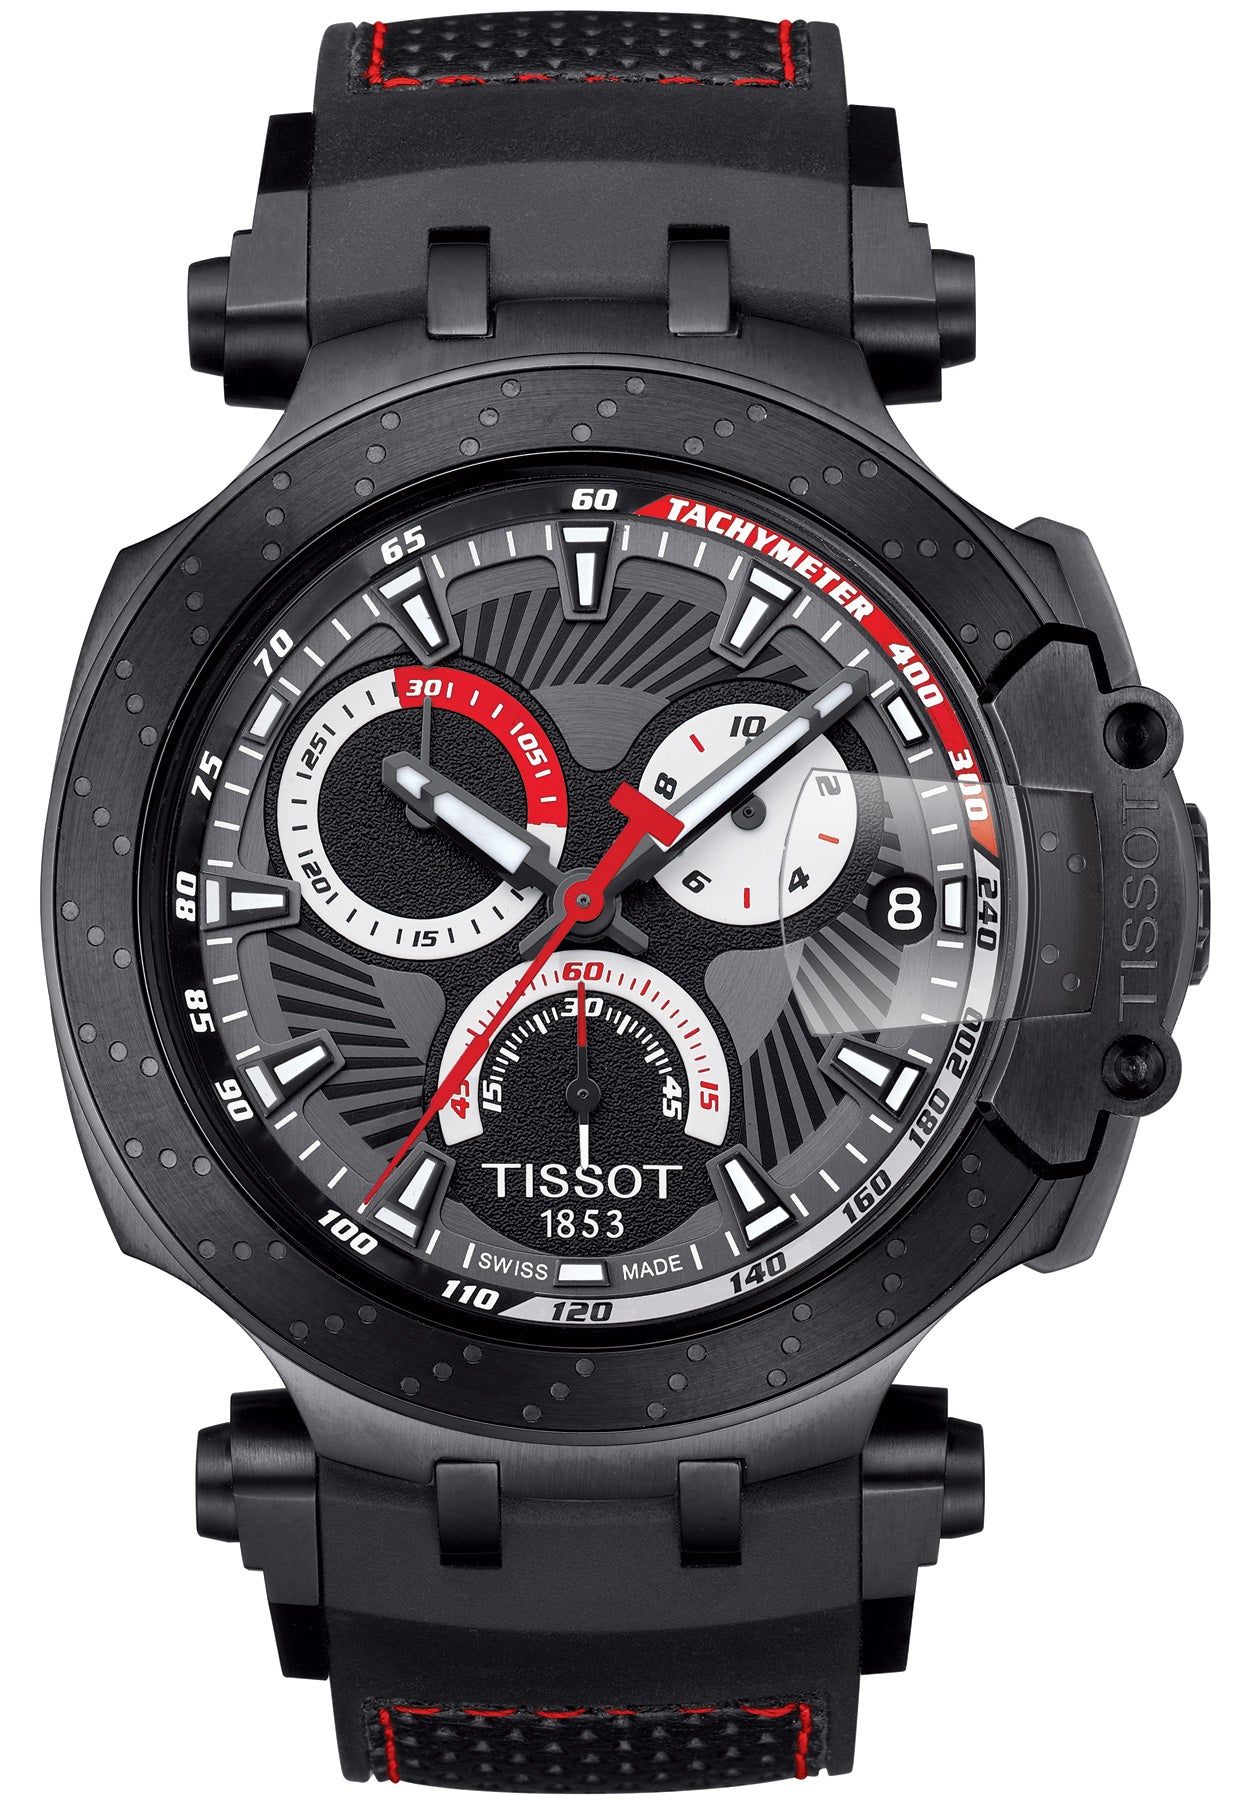 Tissot Watch T-race Motogp Jorge Lorenzo Limited Edition 2018